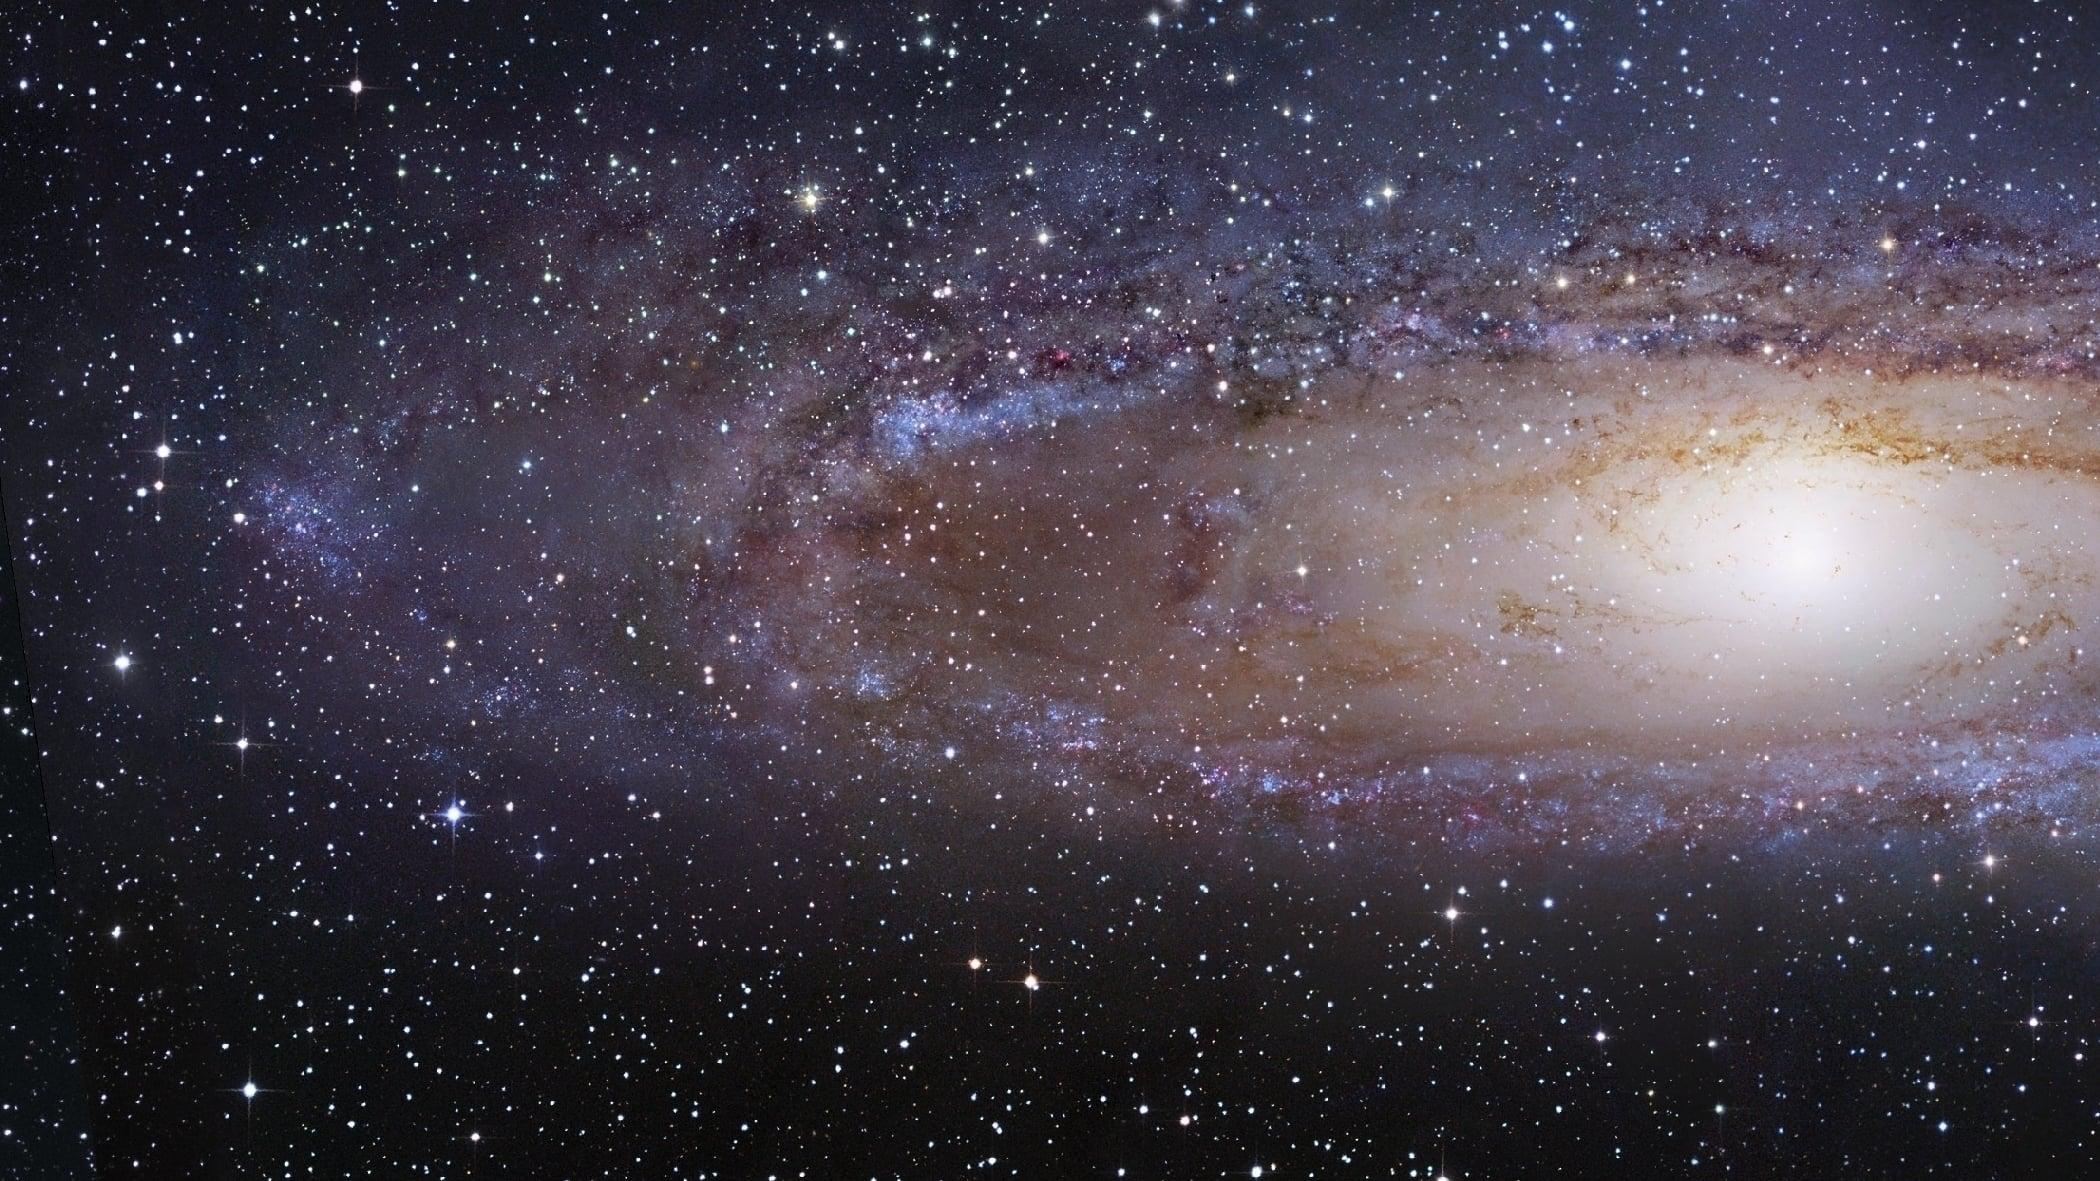 Inside the Milky Way backdrop